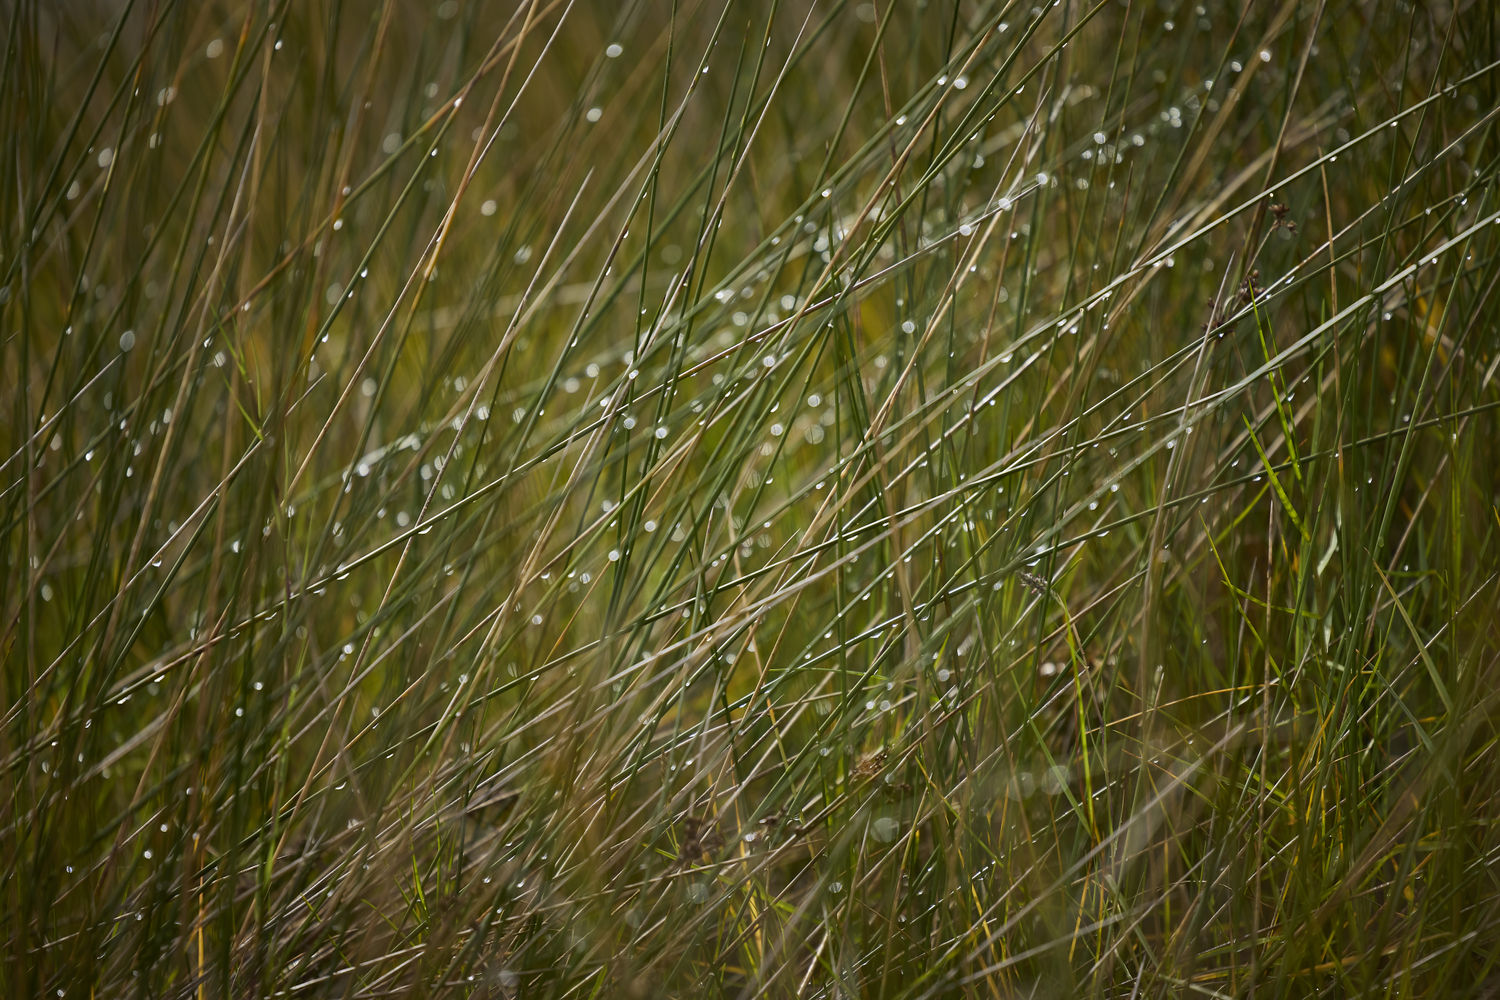 Native Grass in the Margaret River Region